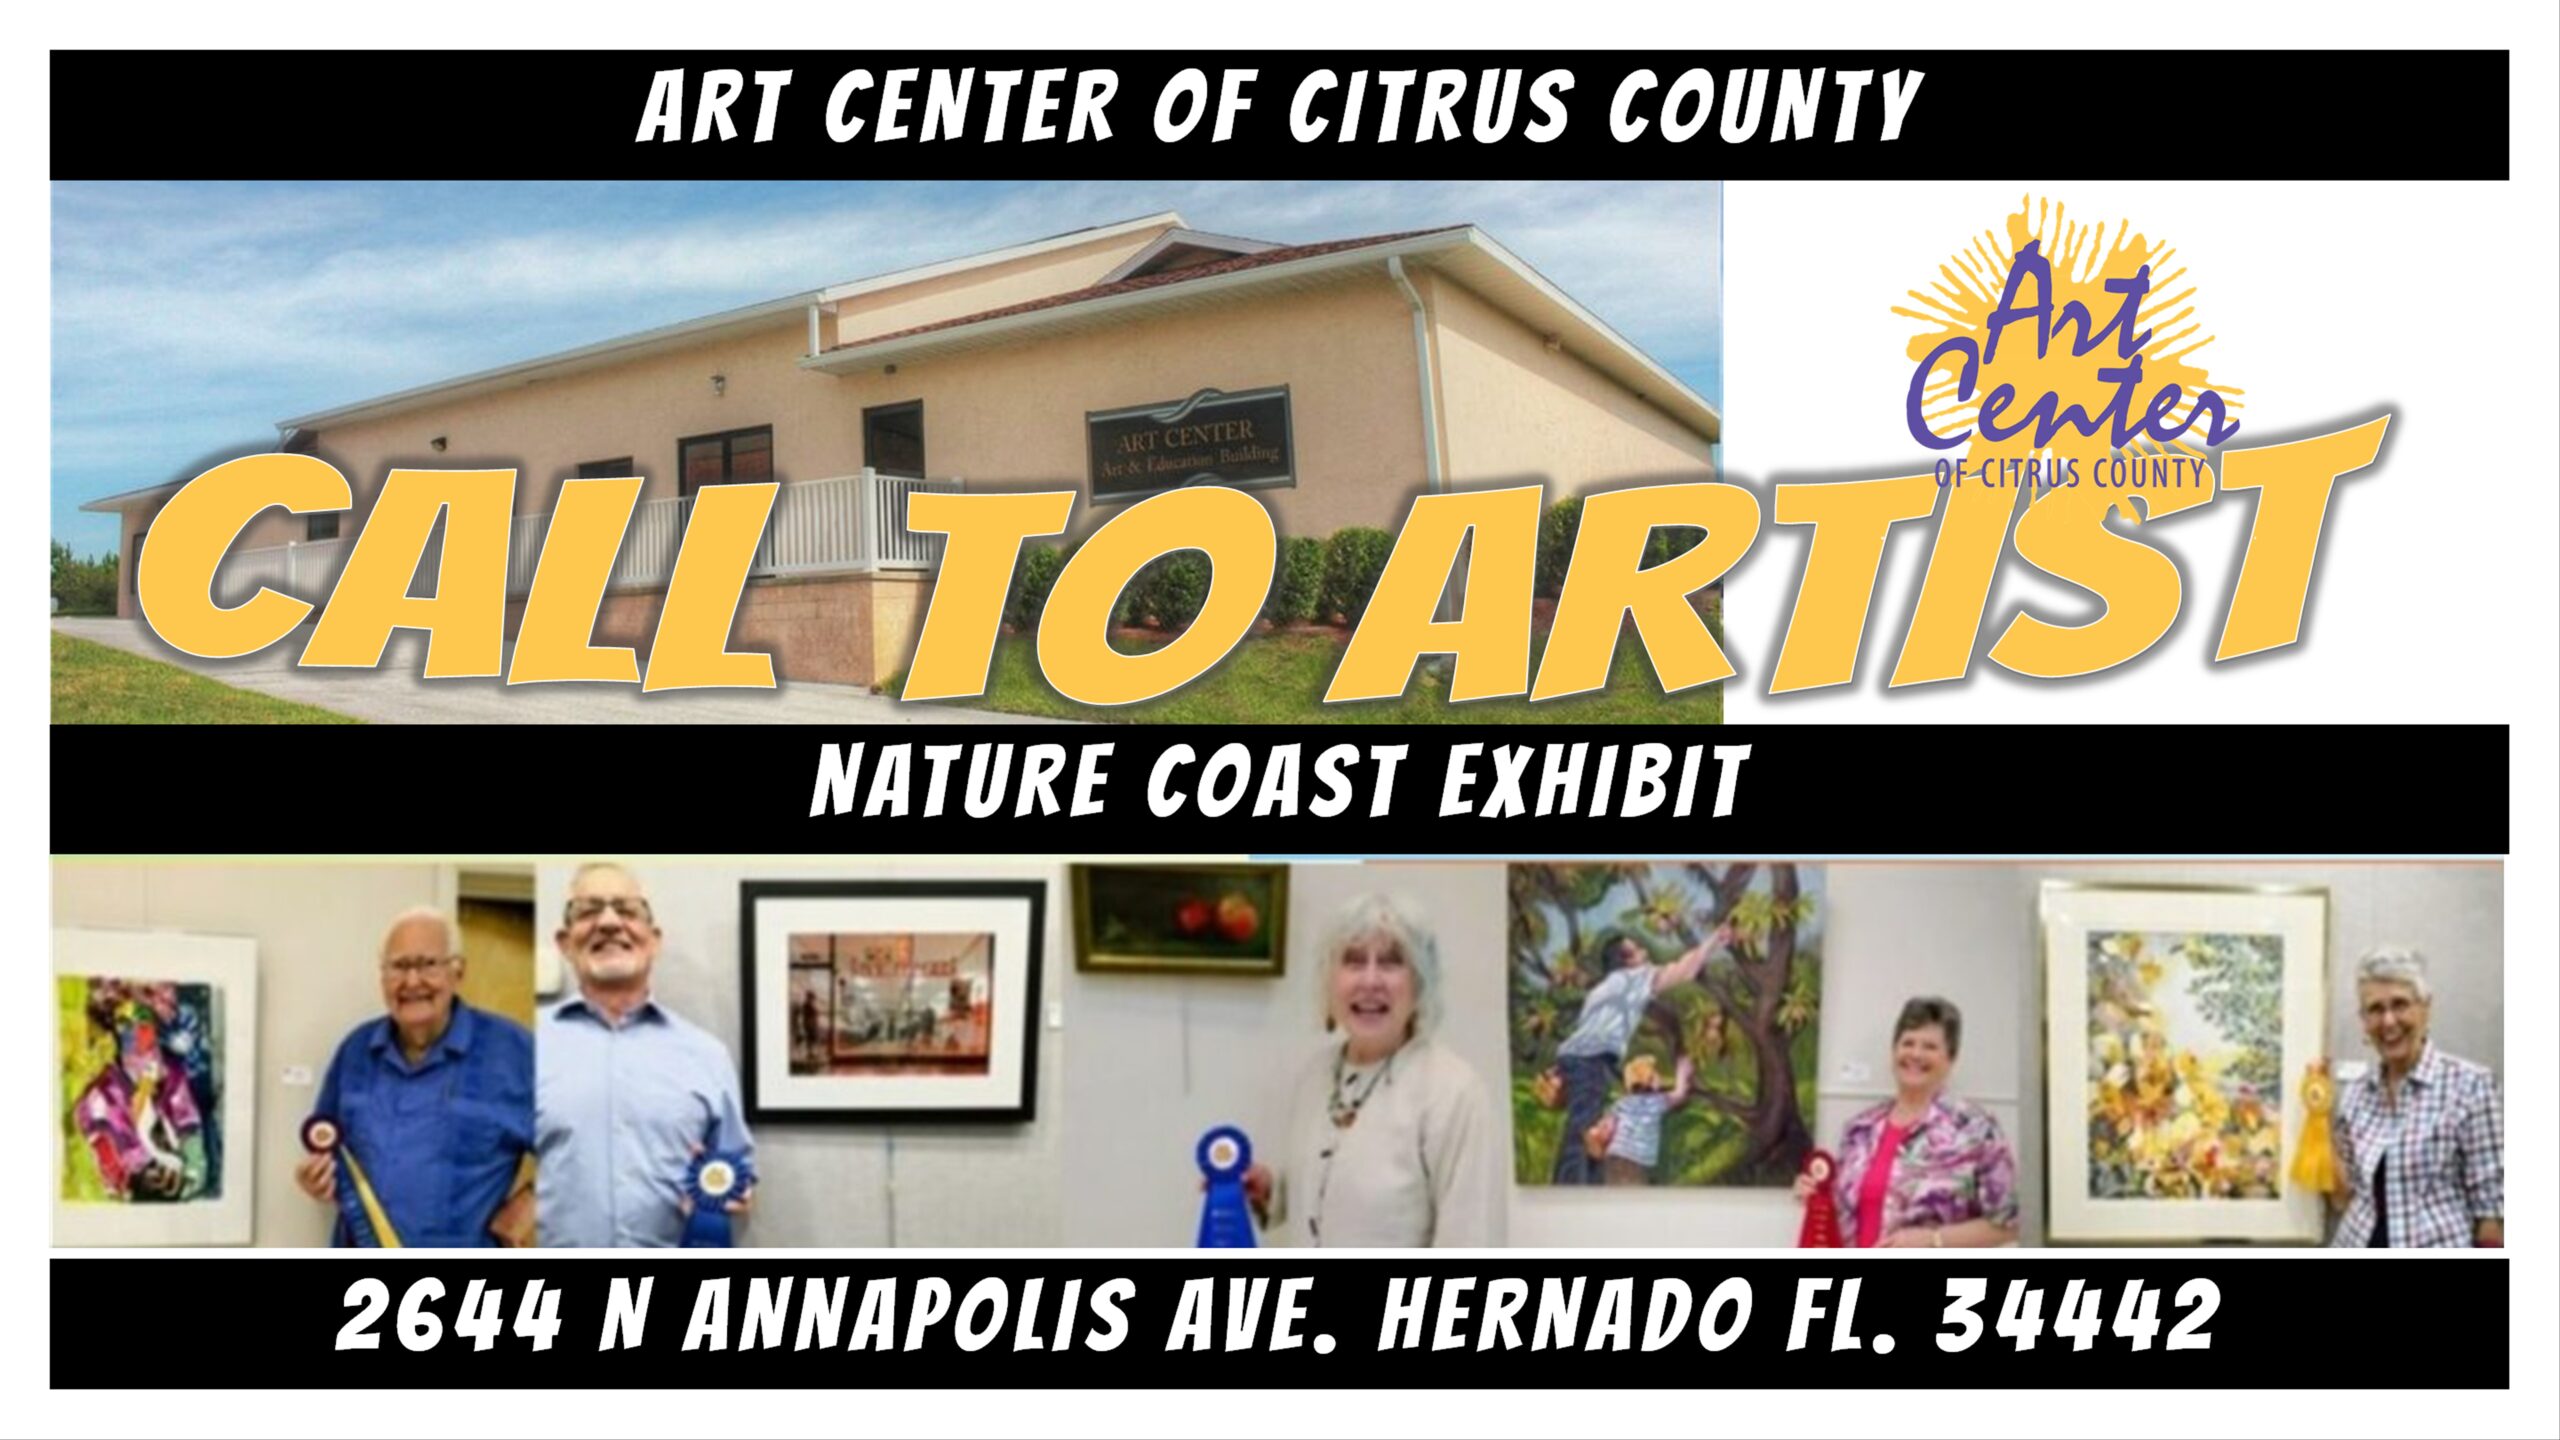 Call to Artist Nature Coast Exhibit 2 Nov.1 @ 10:00 AM – 2:00 PM